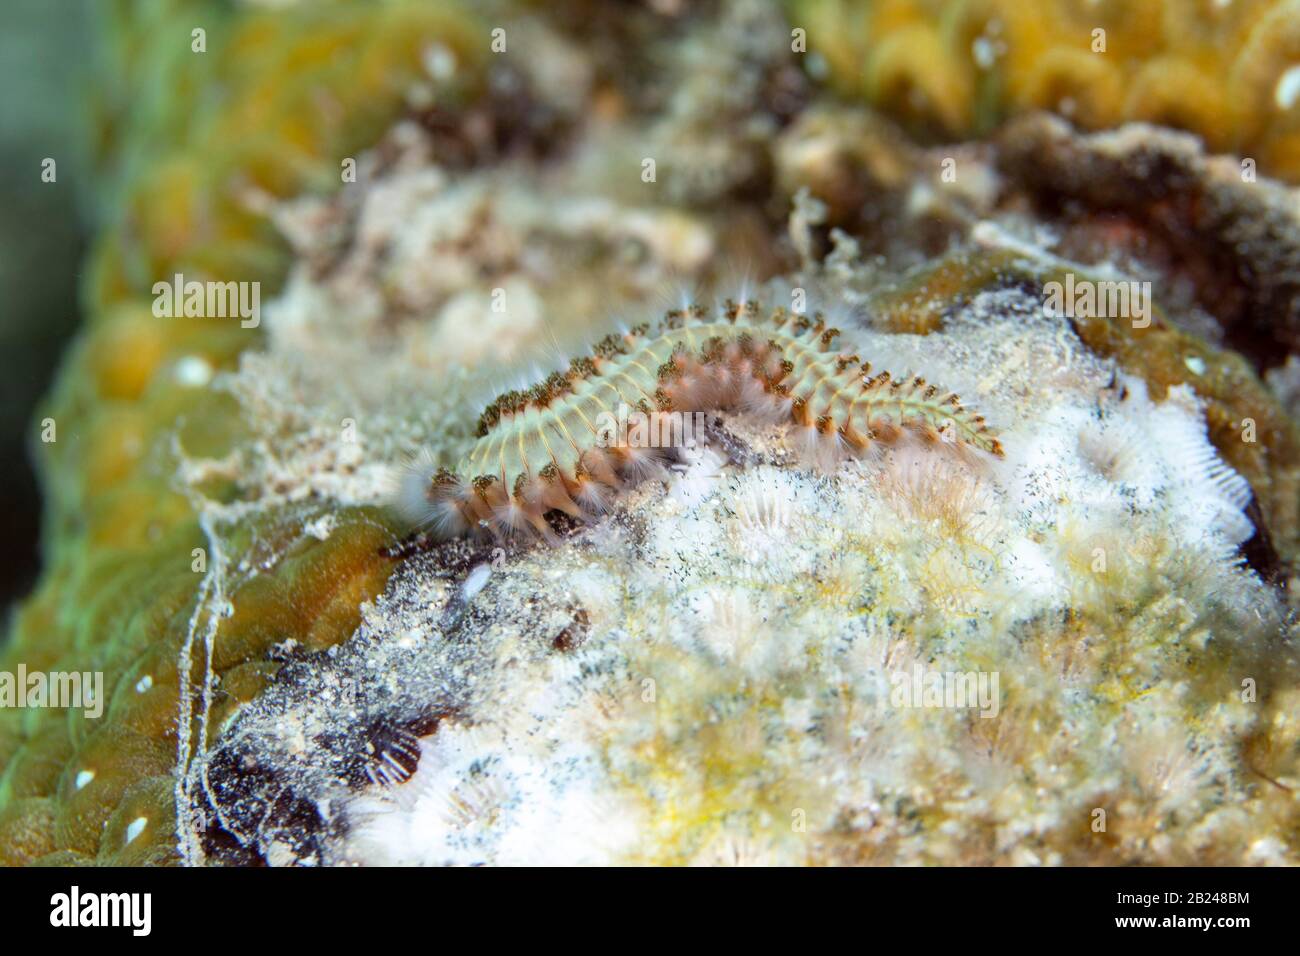 Bearded fireworm, bearded fireworm (Hermodice carunculata), Coral reef off Curacao, Caribbean Stock Photo